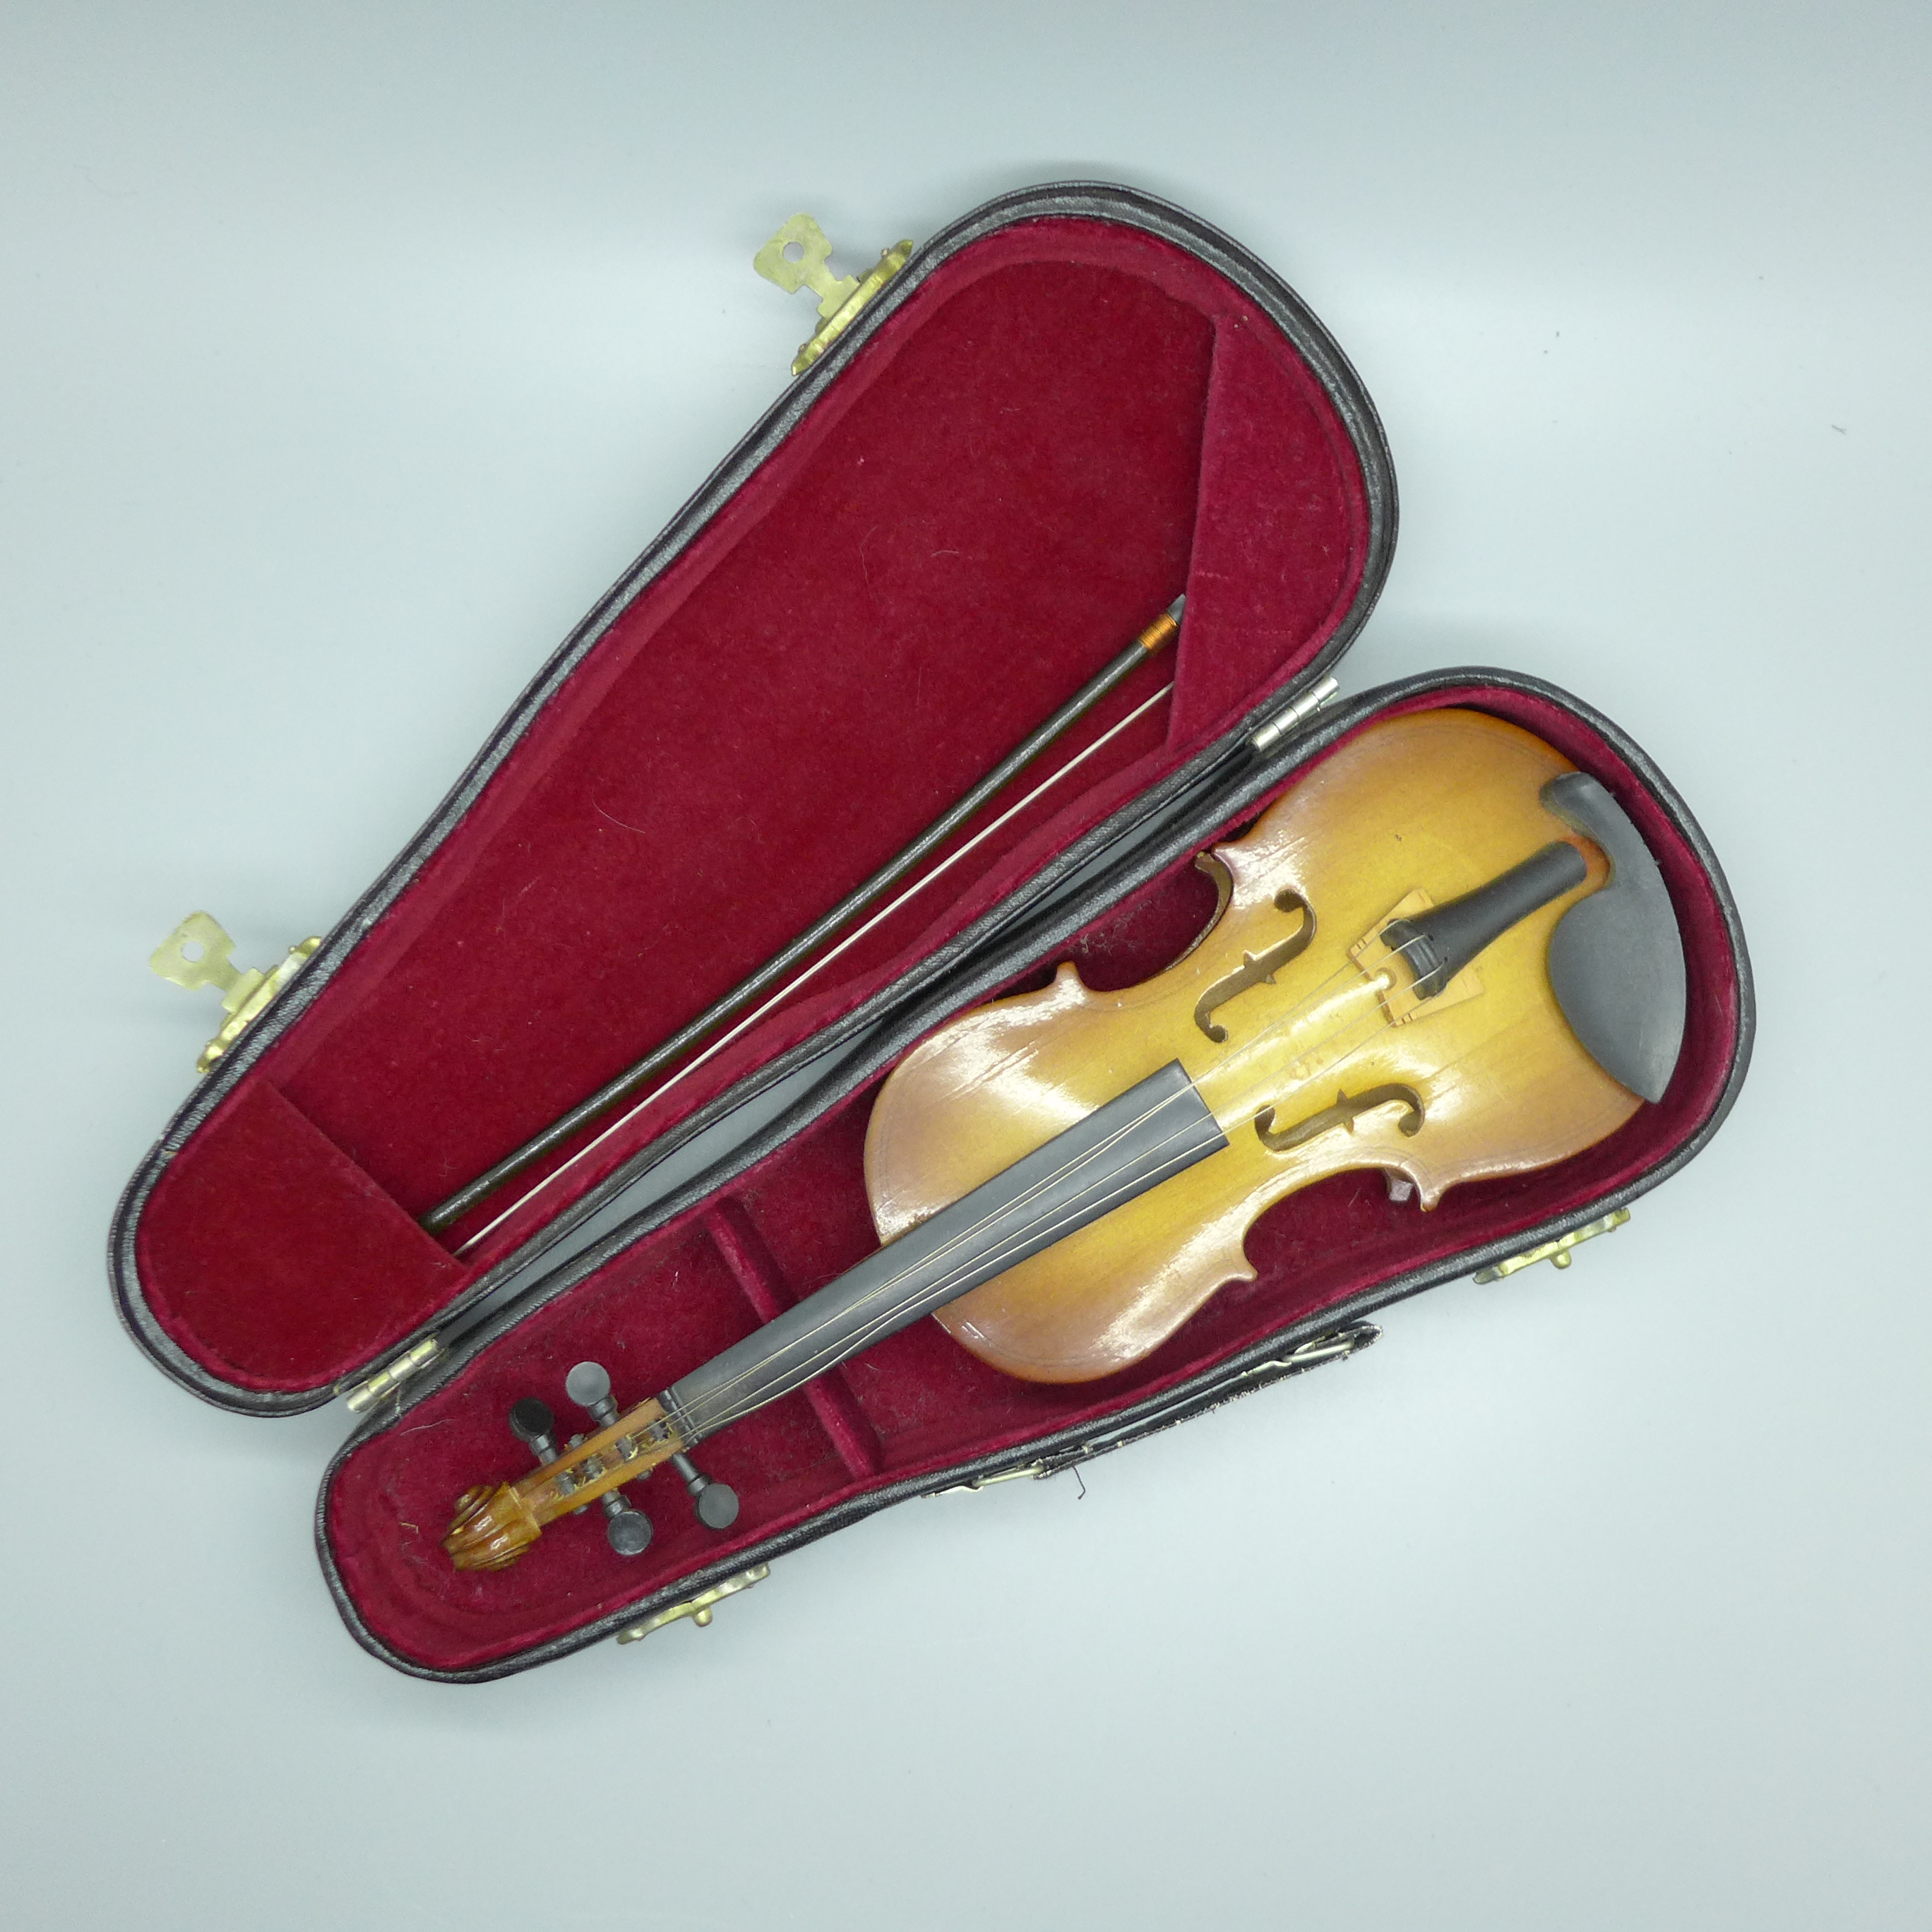 A miniature model of a violin and case, 23cm